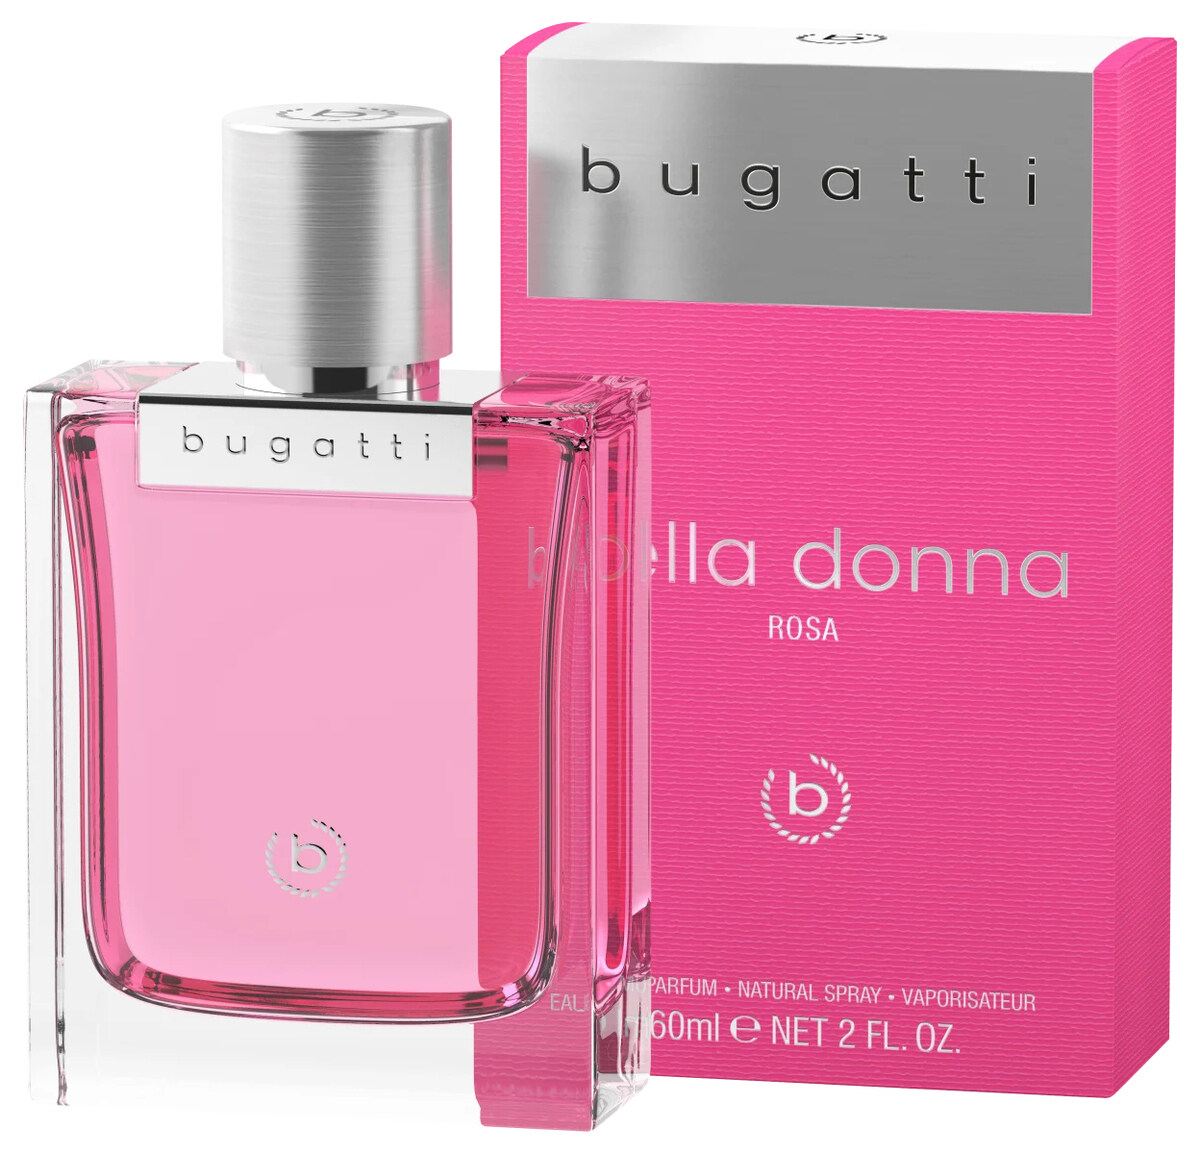 Bella Donna Rosa by bugatti Reviews Facts Perfume & » Fashion